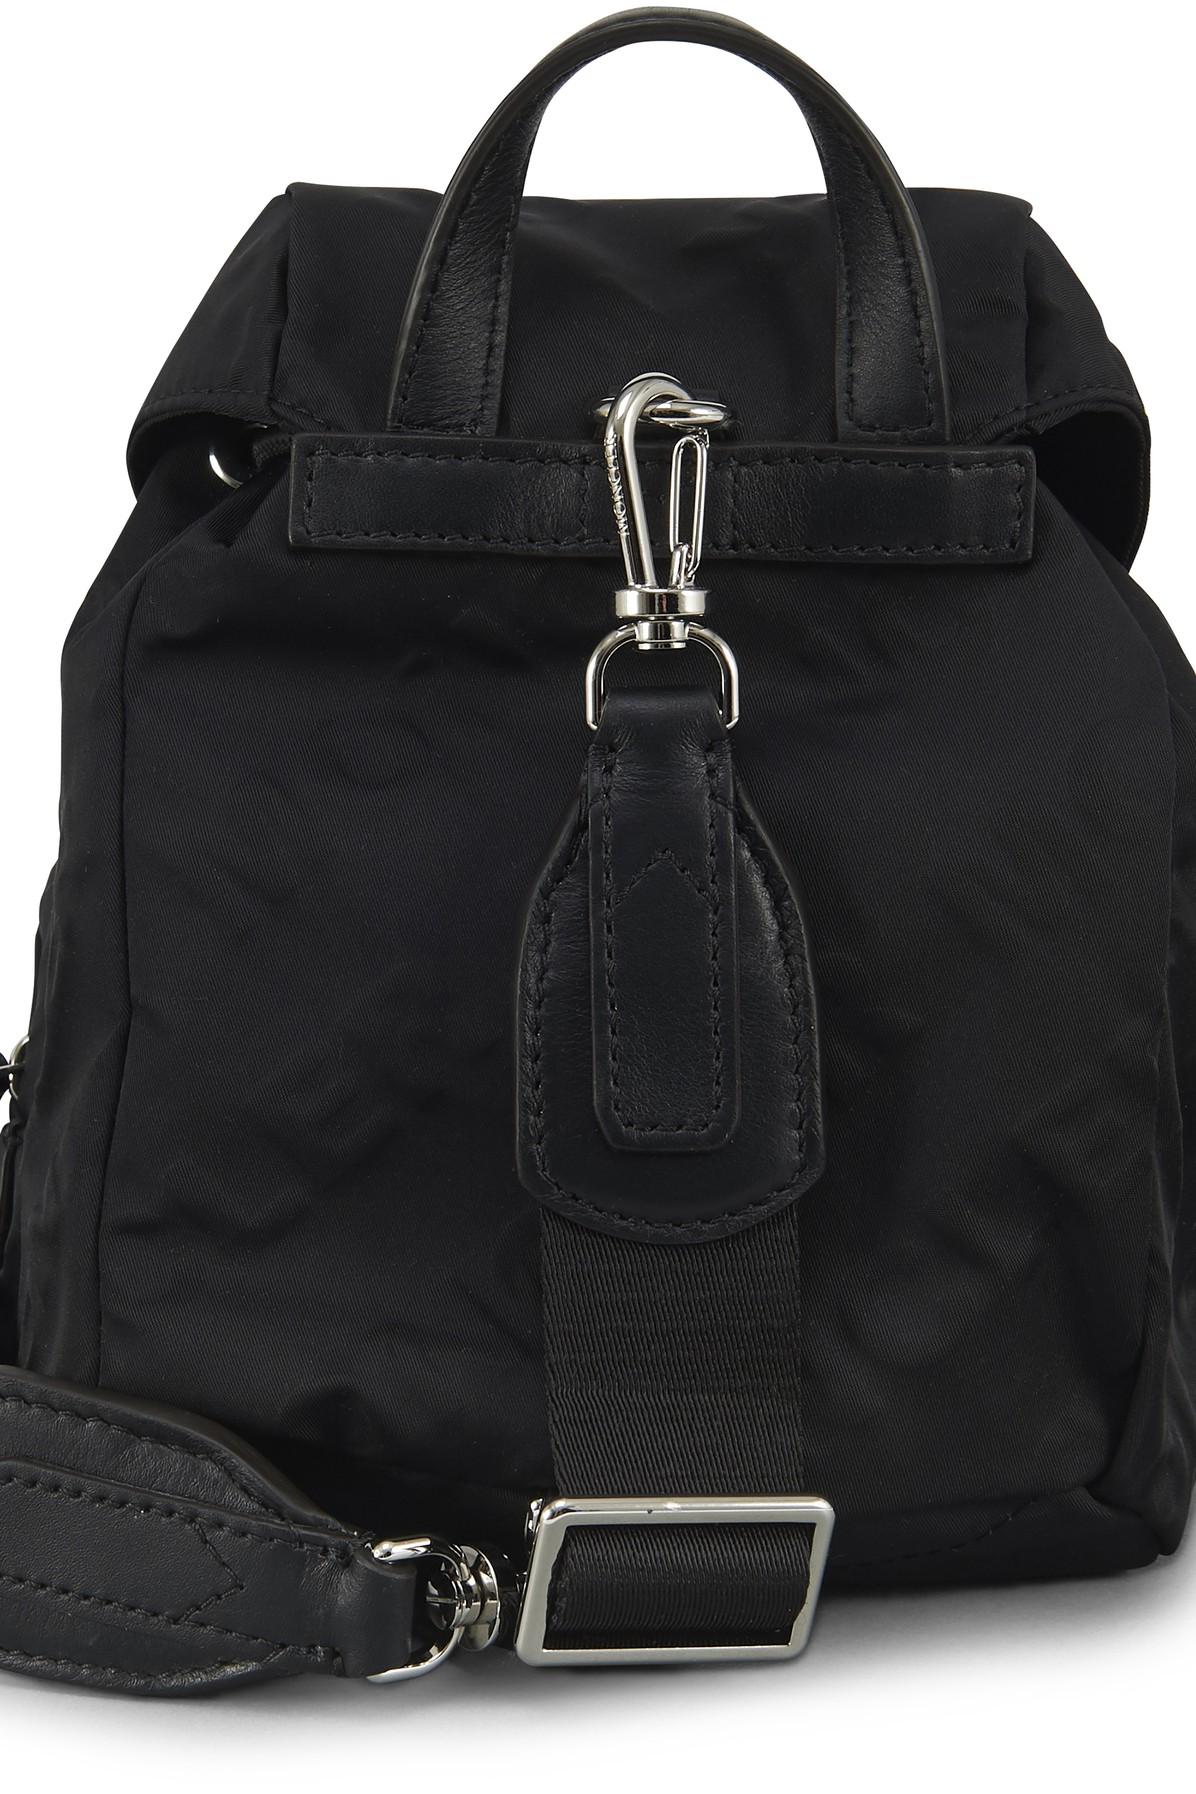 Moncler Dauphine Mini Cross Body Bag in Black - Lyst